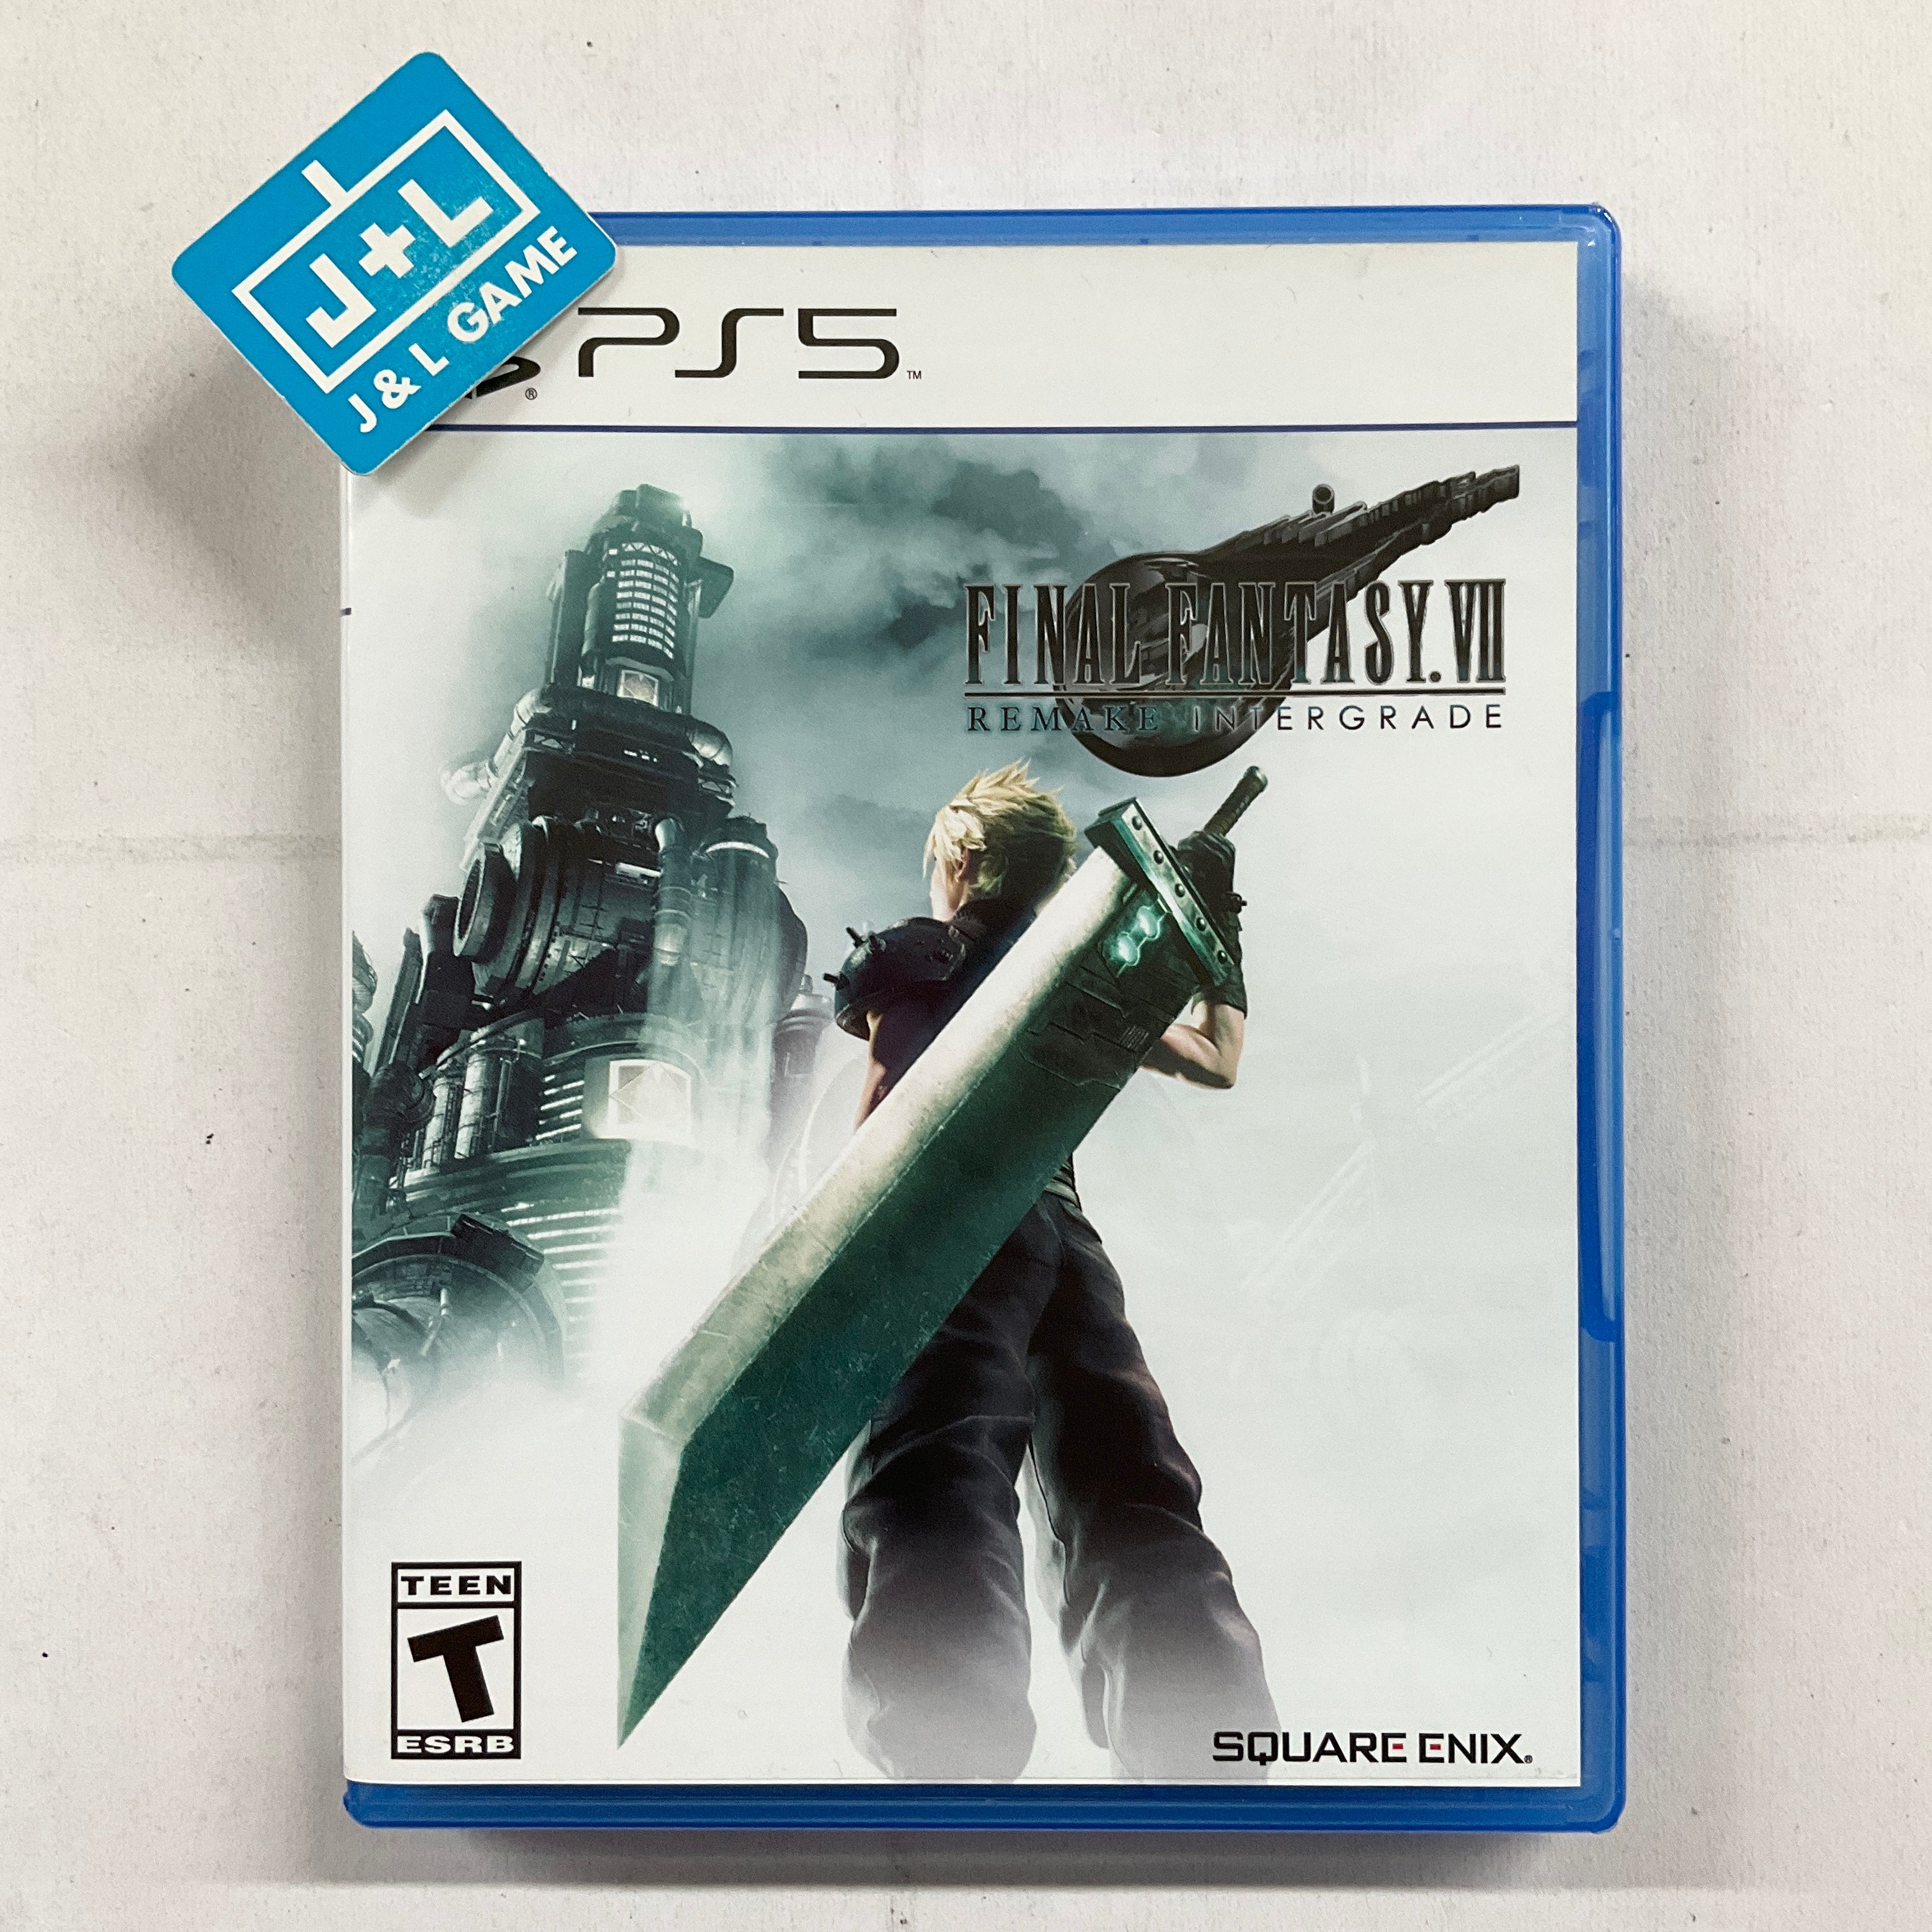 Final Fantasy VII Remake Intergrade  - (PS5) PlayStation 5 [UNBOXING] Video Games Square Enix   